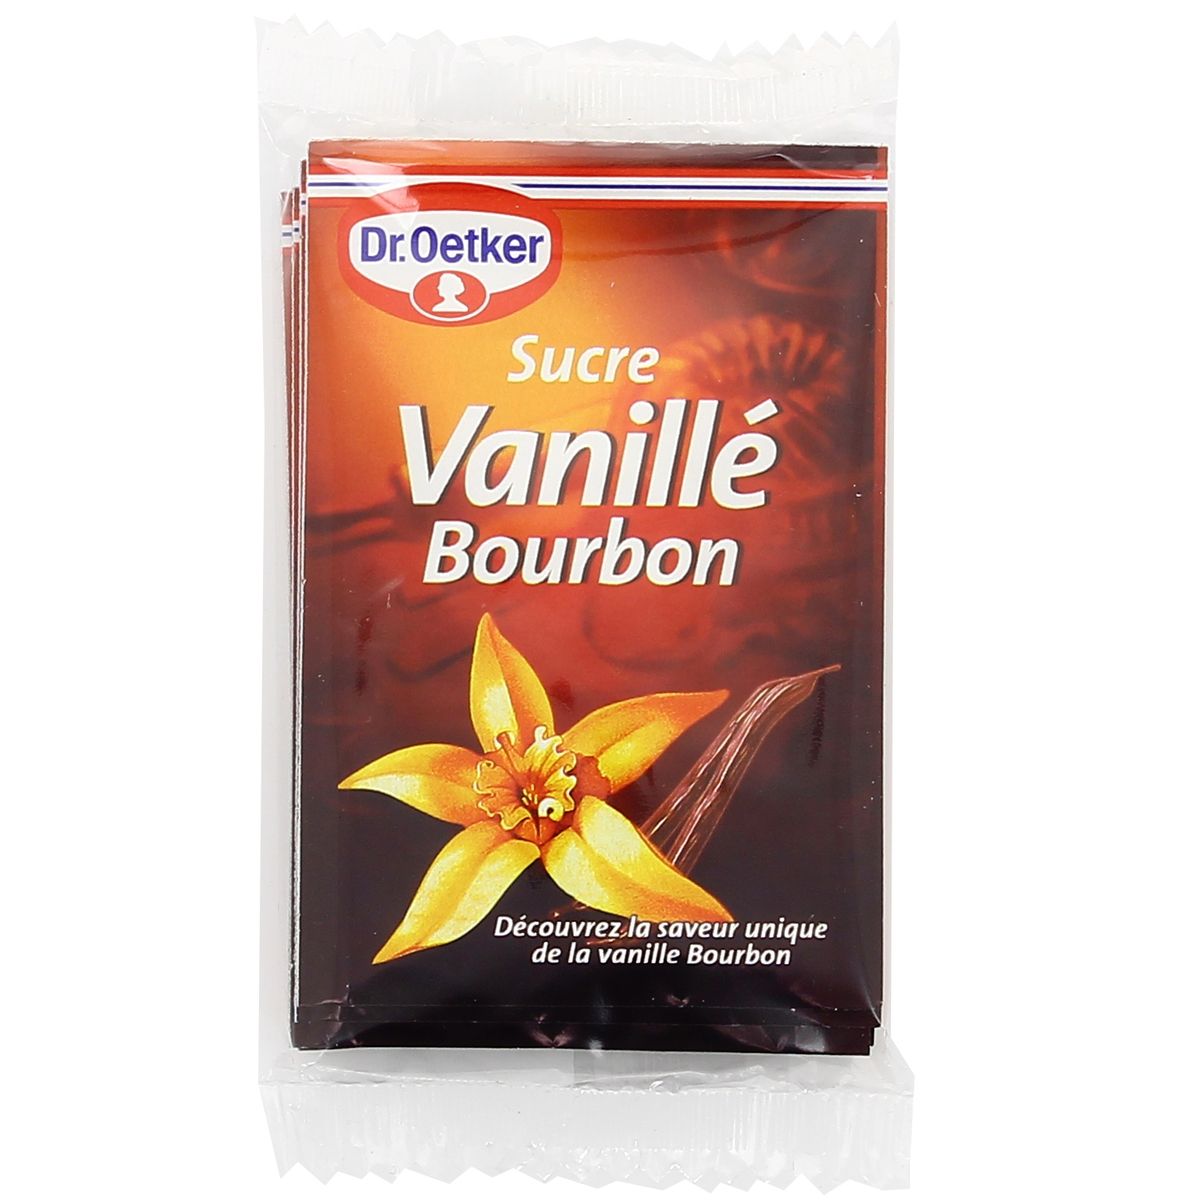 Dr Oetker sucre vanille bourbon sachets 10x 8 gr CHOCKIES